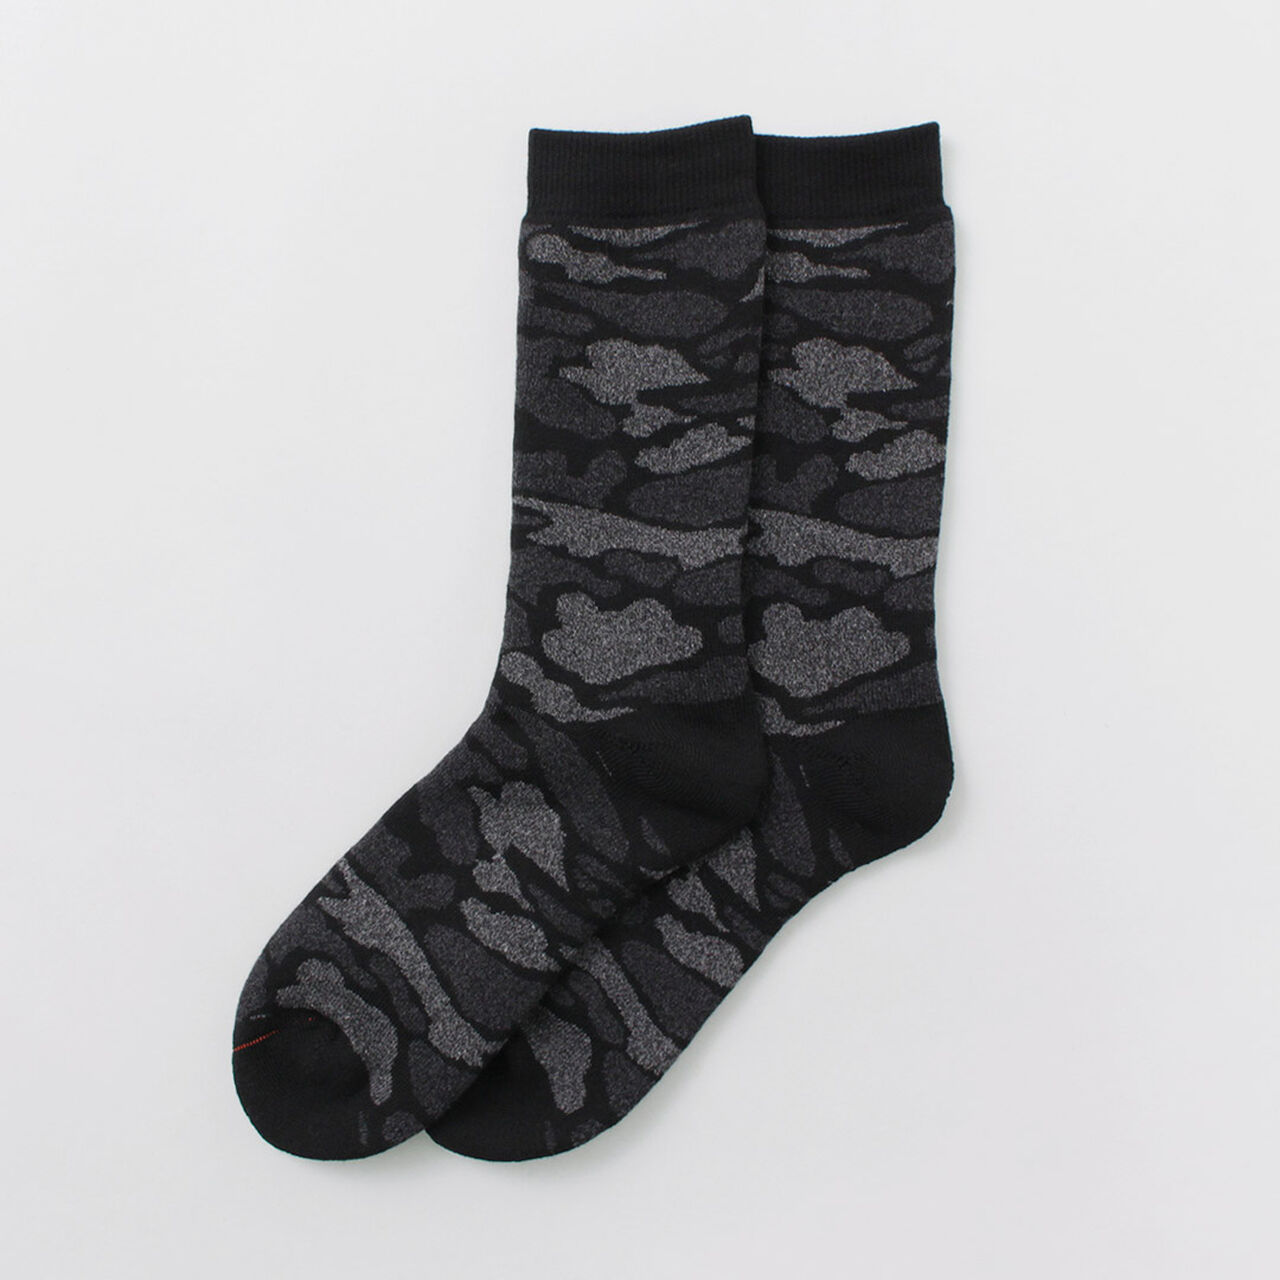 R1339 Pile camo crew socks,Black, large image number 0